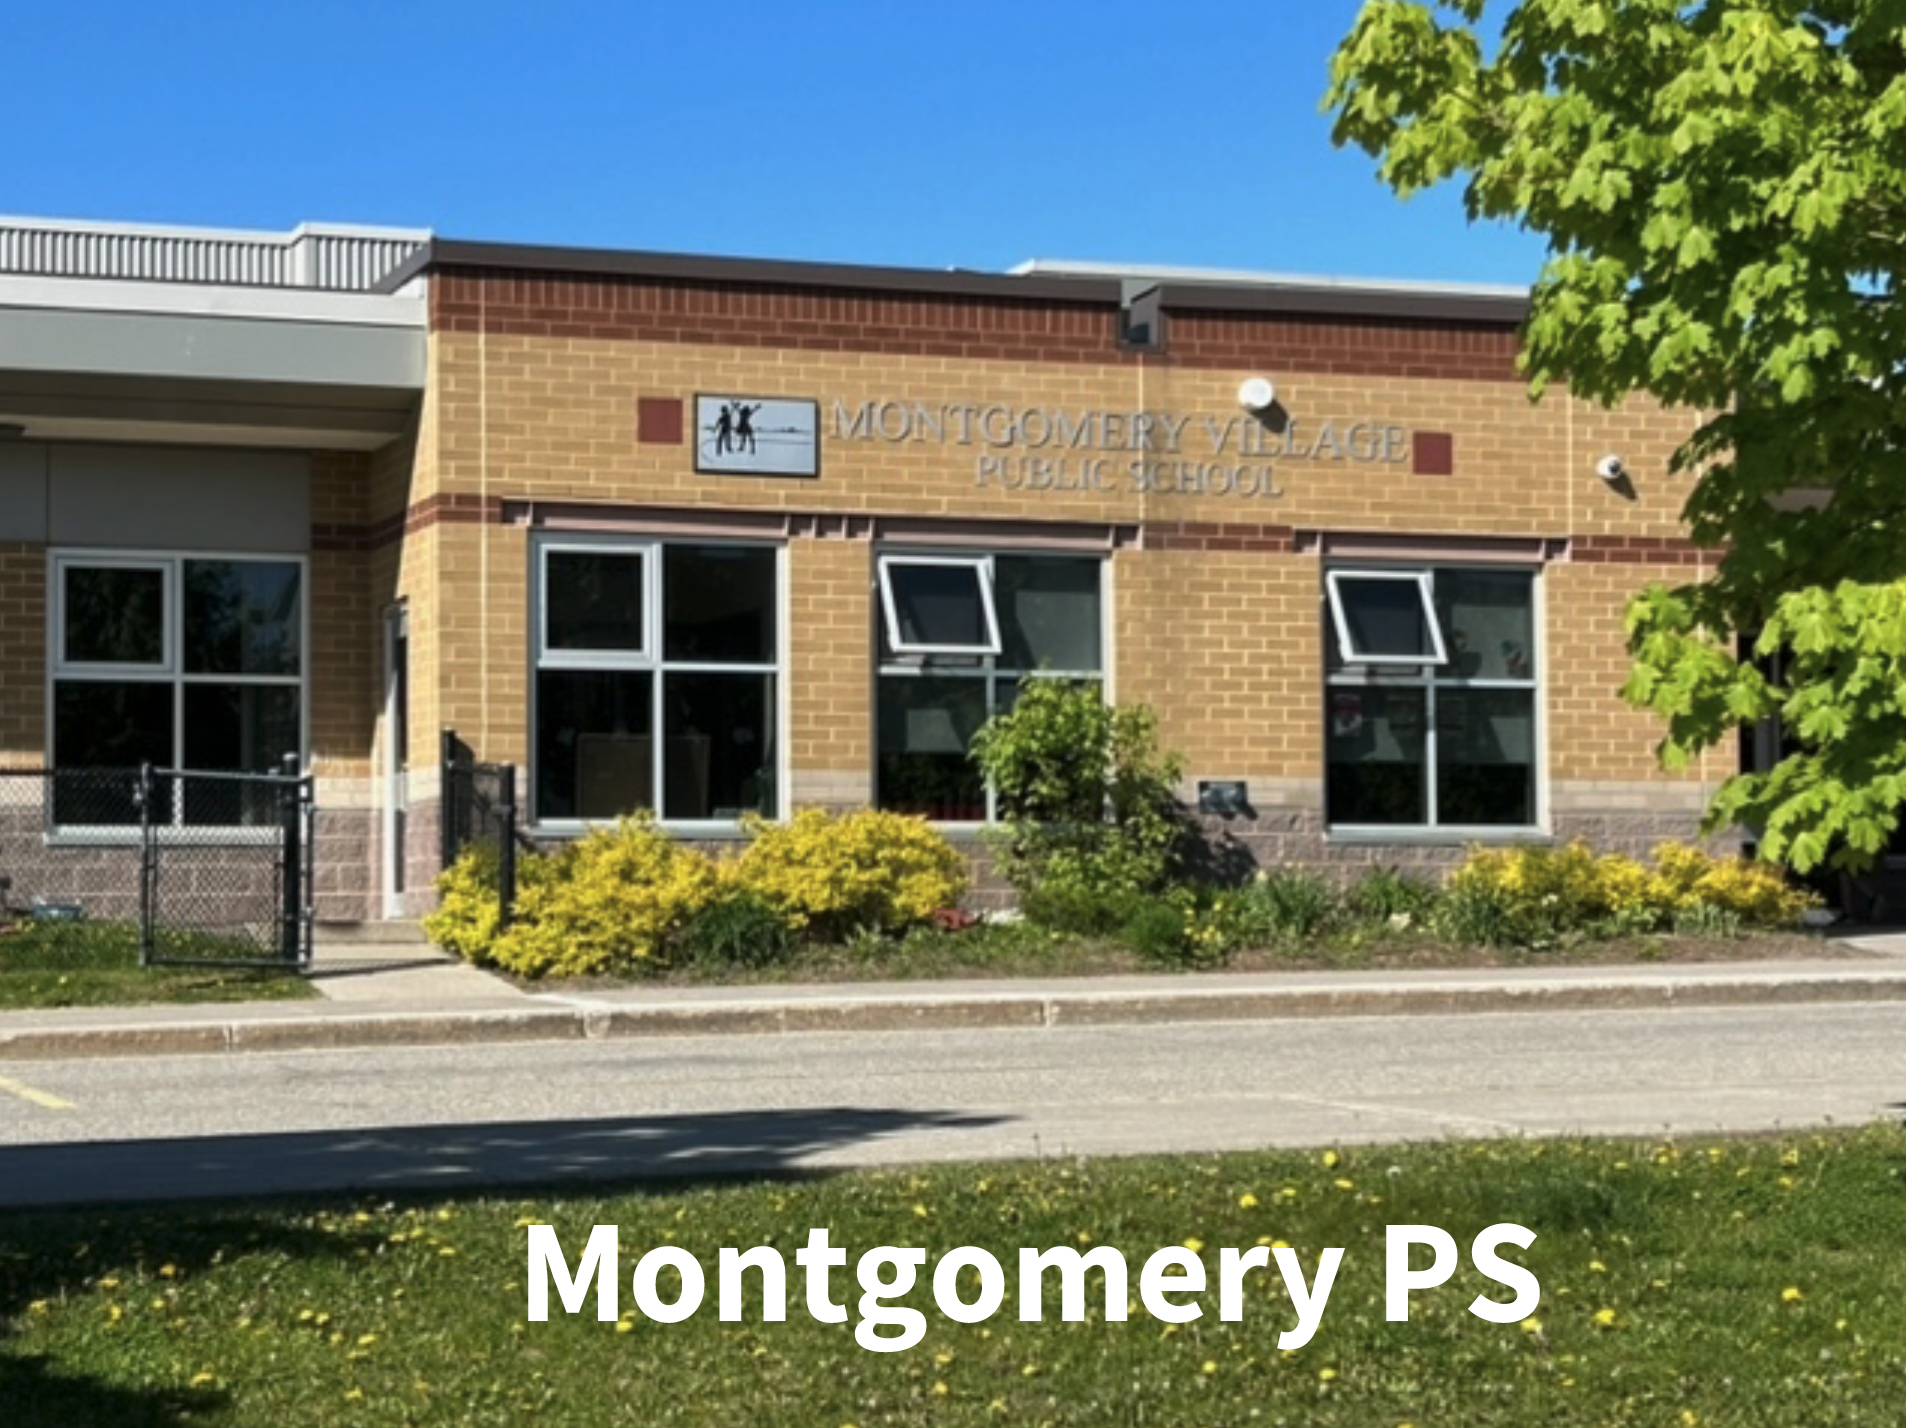 Montgomery Public School